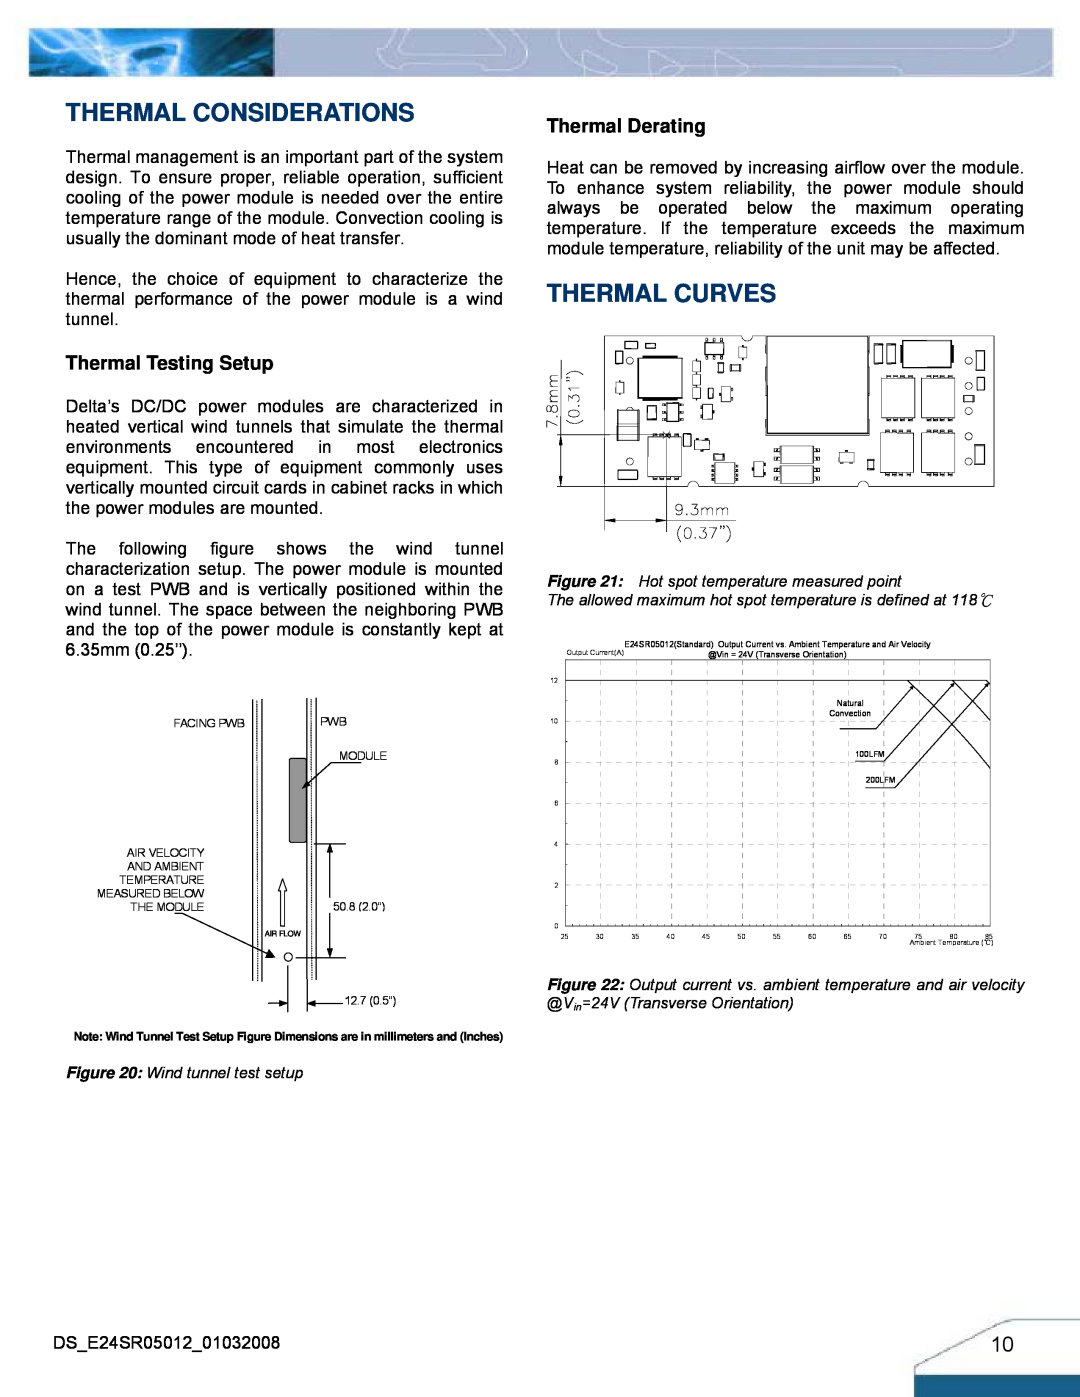 Delta Electronics Series E24SR manual Thermal Considerations, Thermal Curves, Thermal Derating, Thermal Testing Setup 